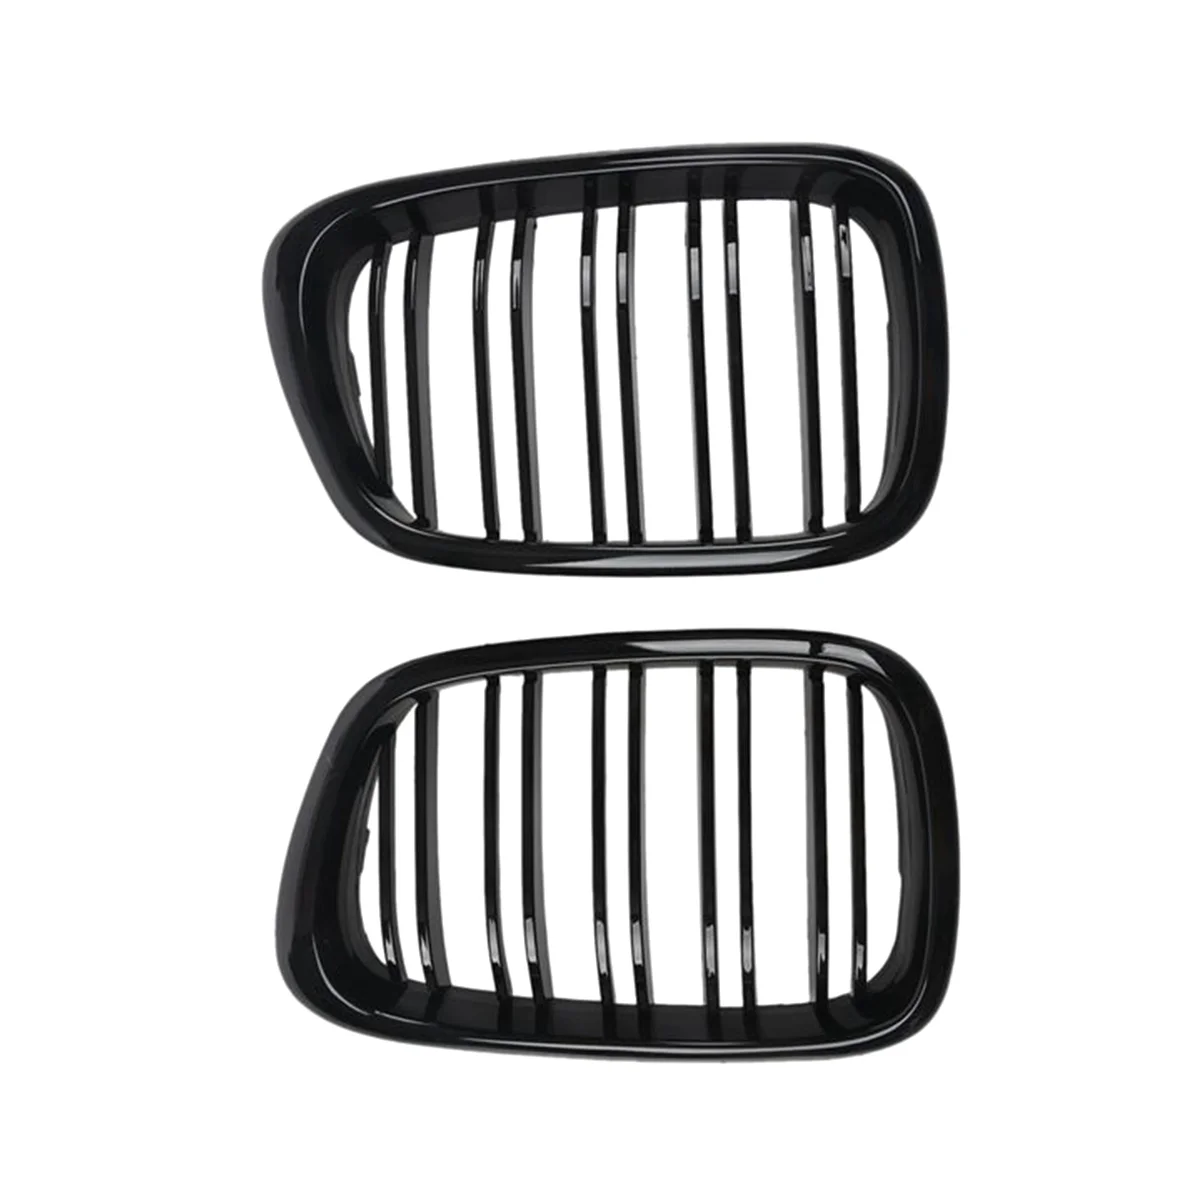 

Глянцевая черная передняя решетка радиатора для BMW E39 5-Series 525 528 1995-2004 51137005837 51137005838